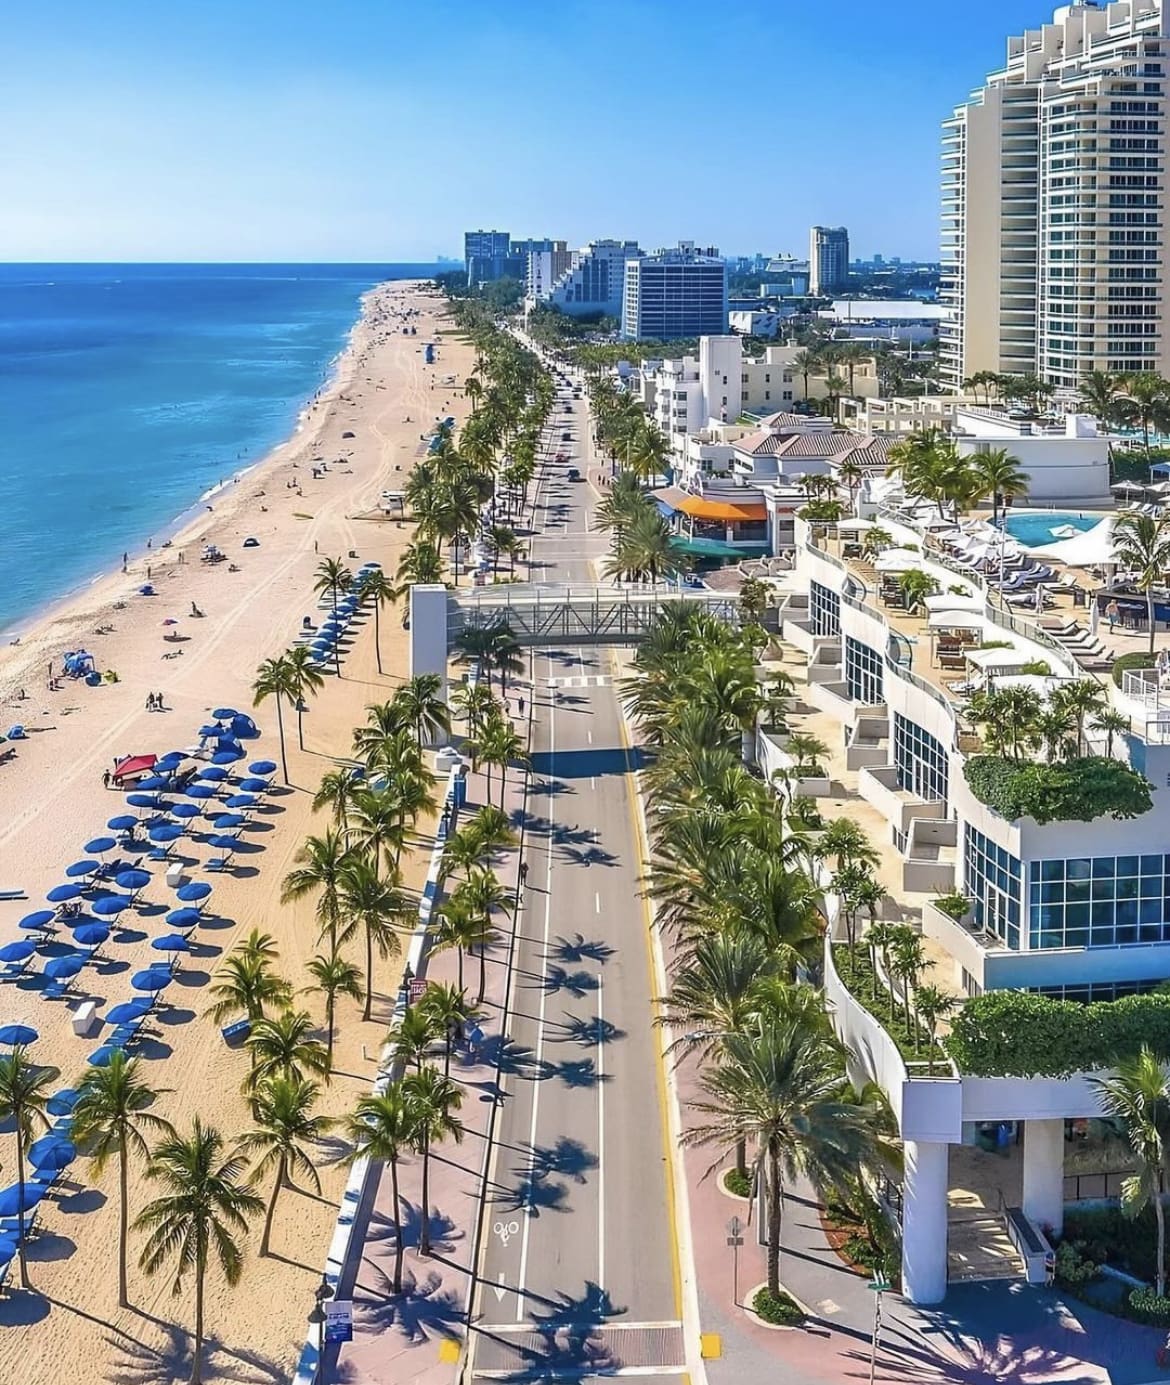 South Beach, Miami, Florida